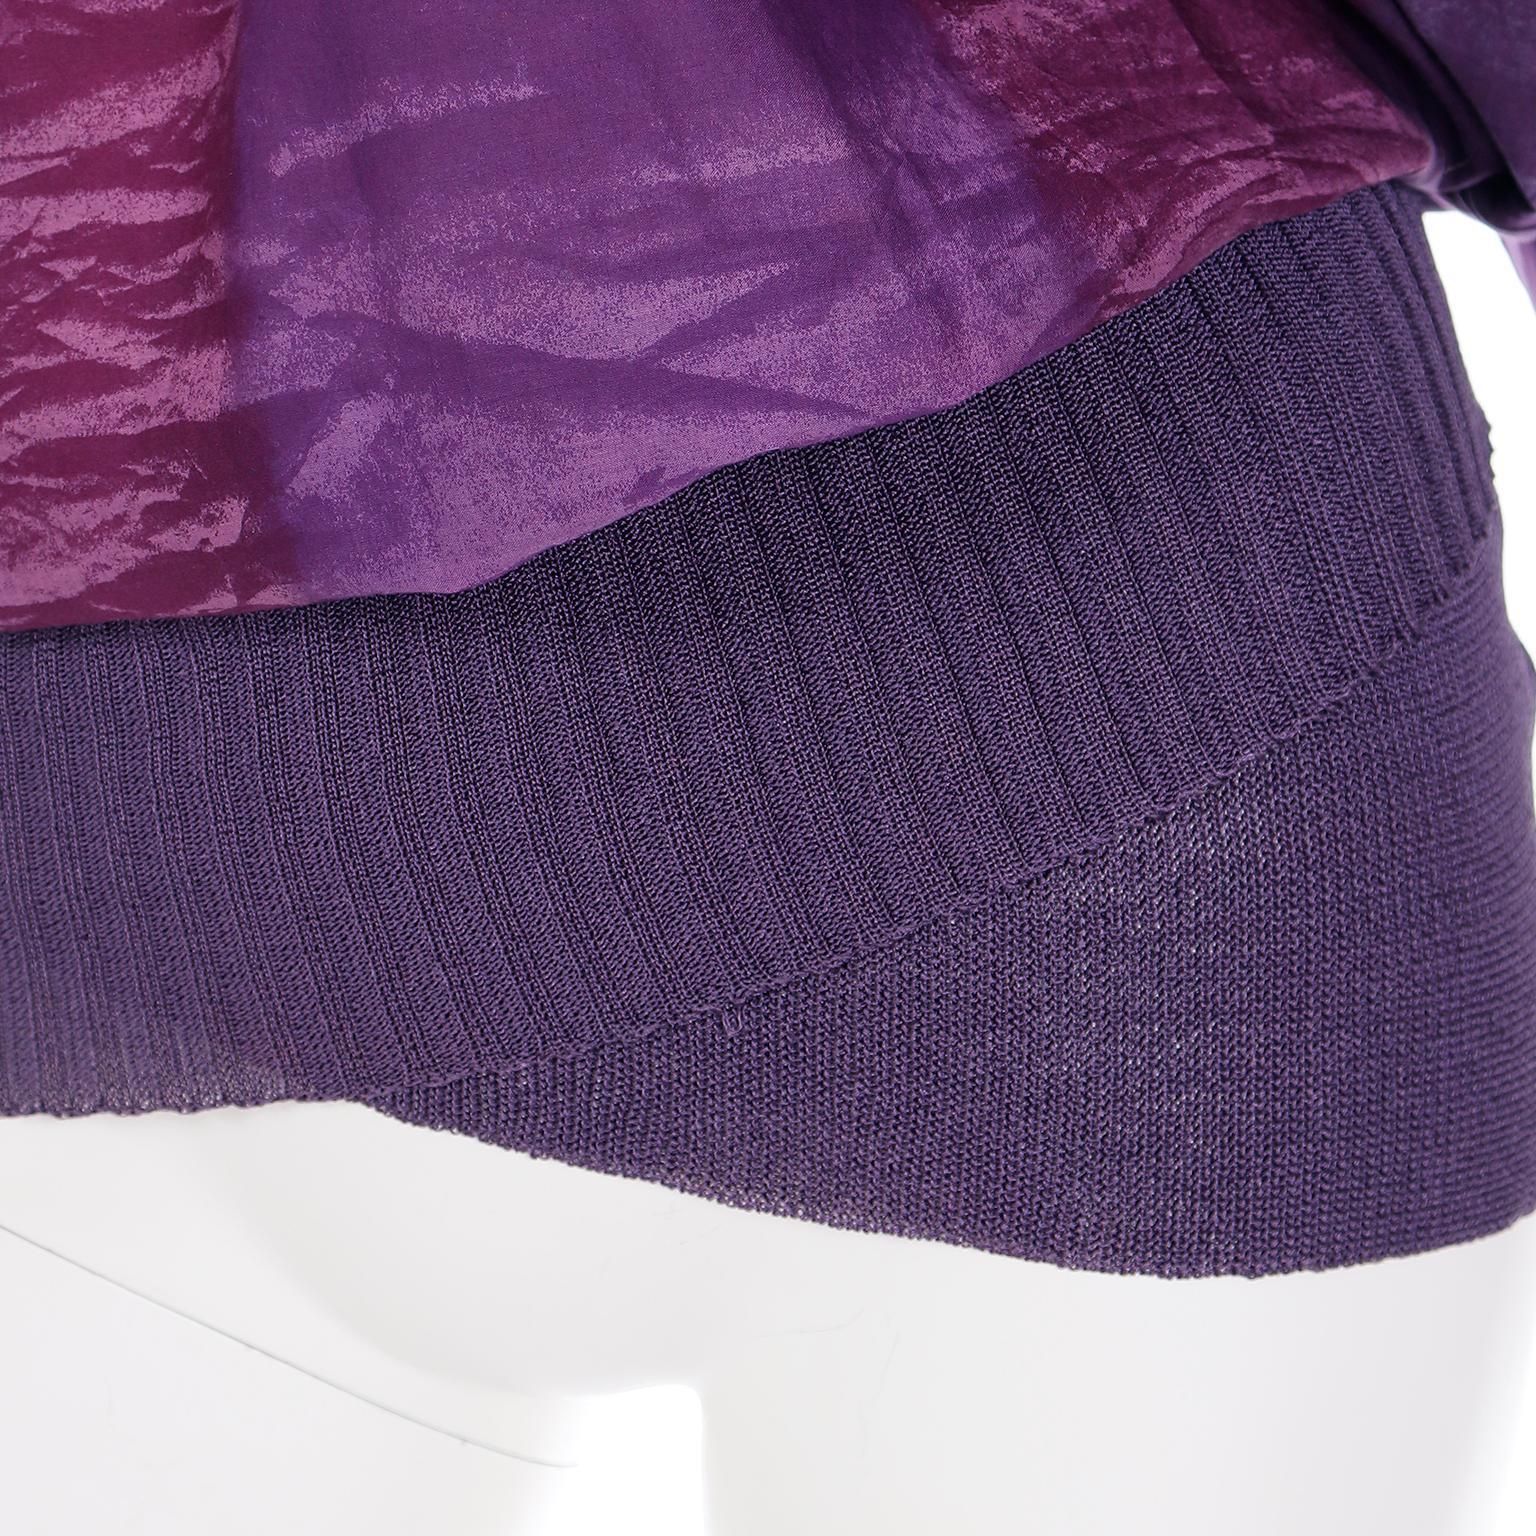 Gianni Versace 1980s Asymmetrical Top Purple Abstract Print Shirt w Knit Trim For Sale 4